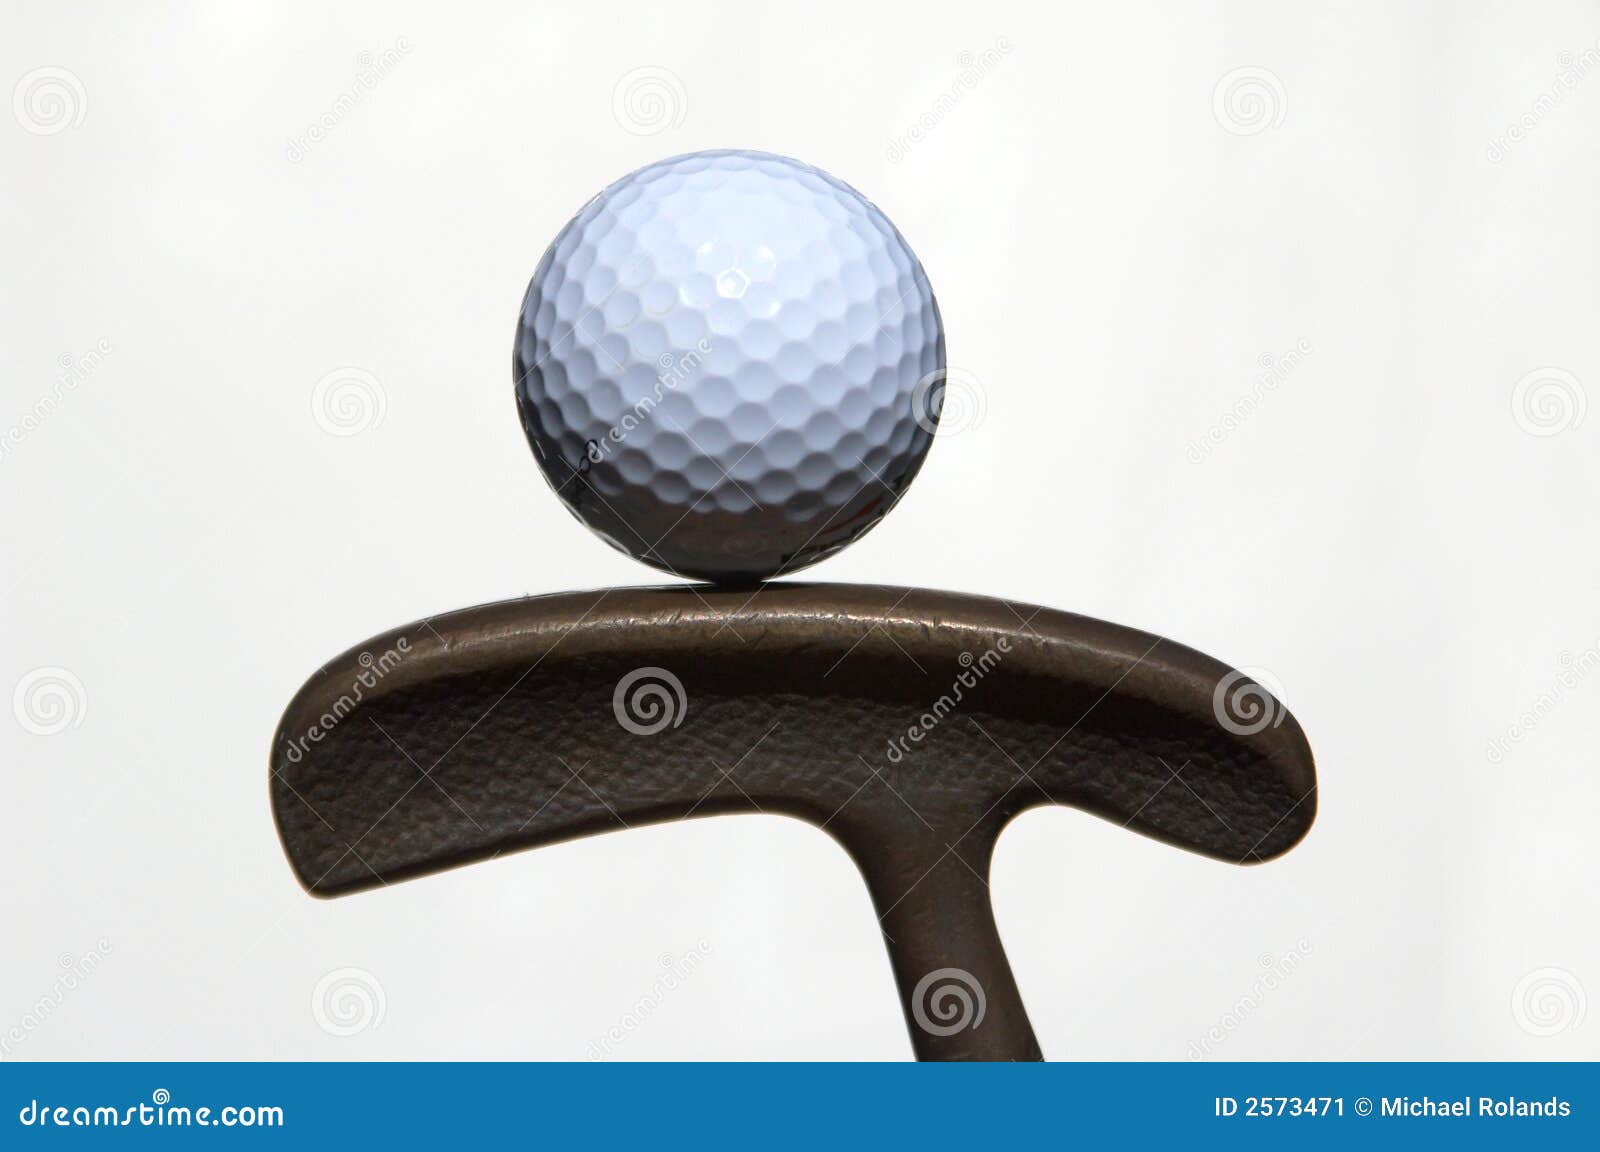 golf ball and putter